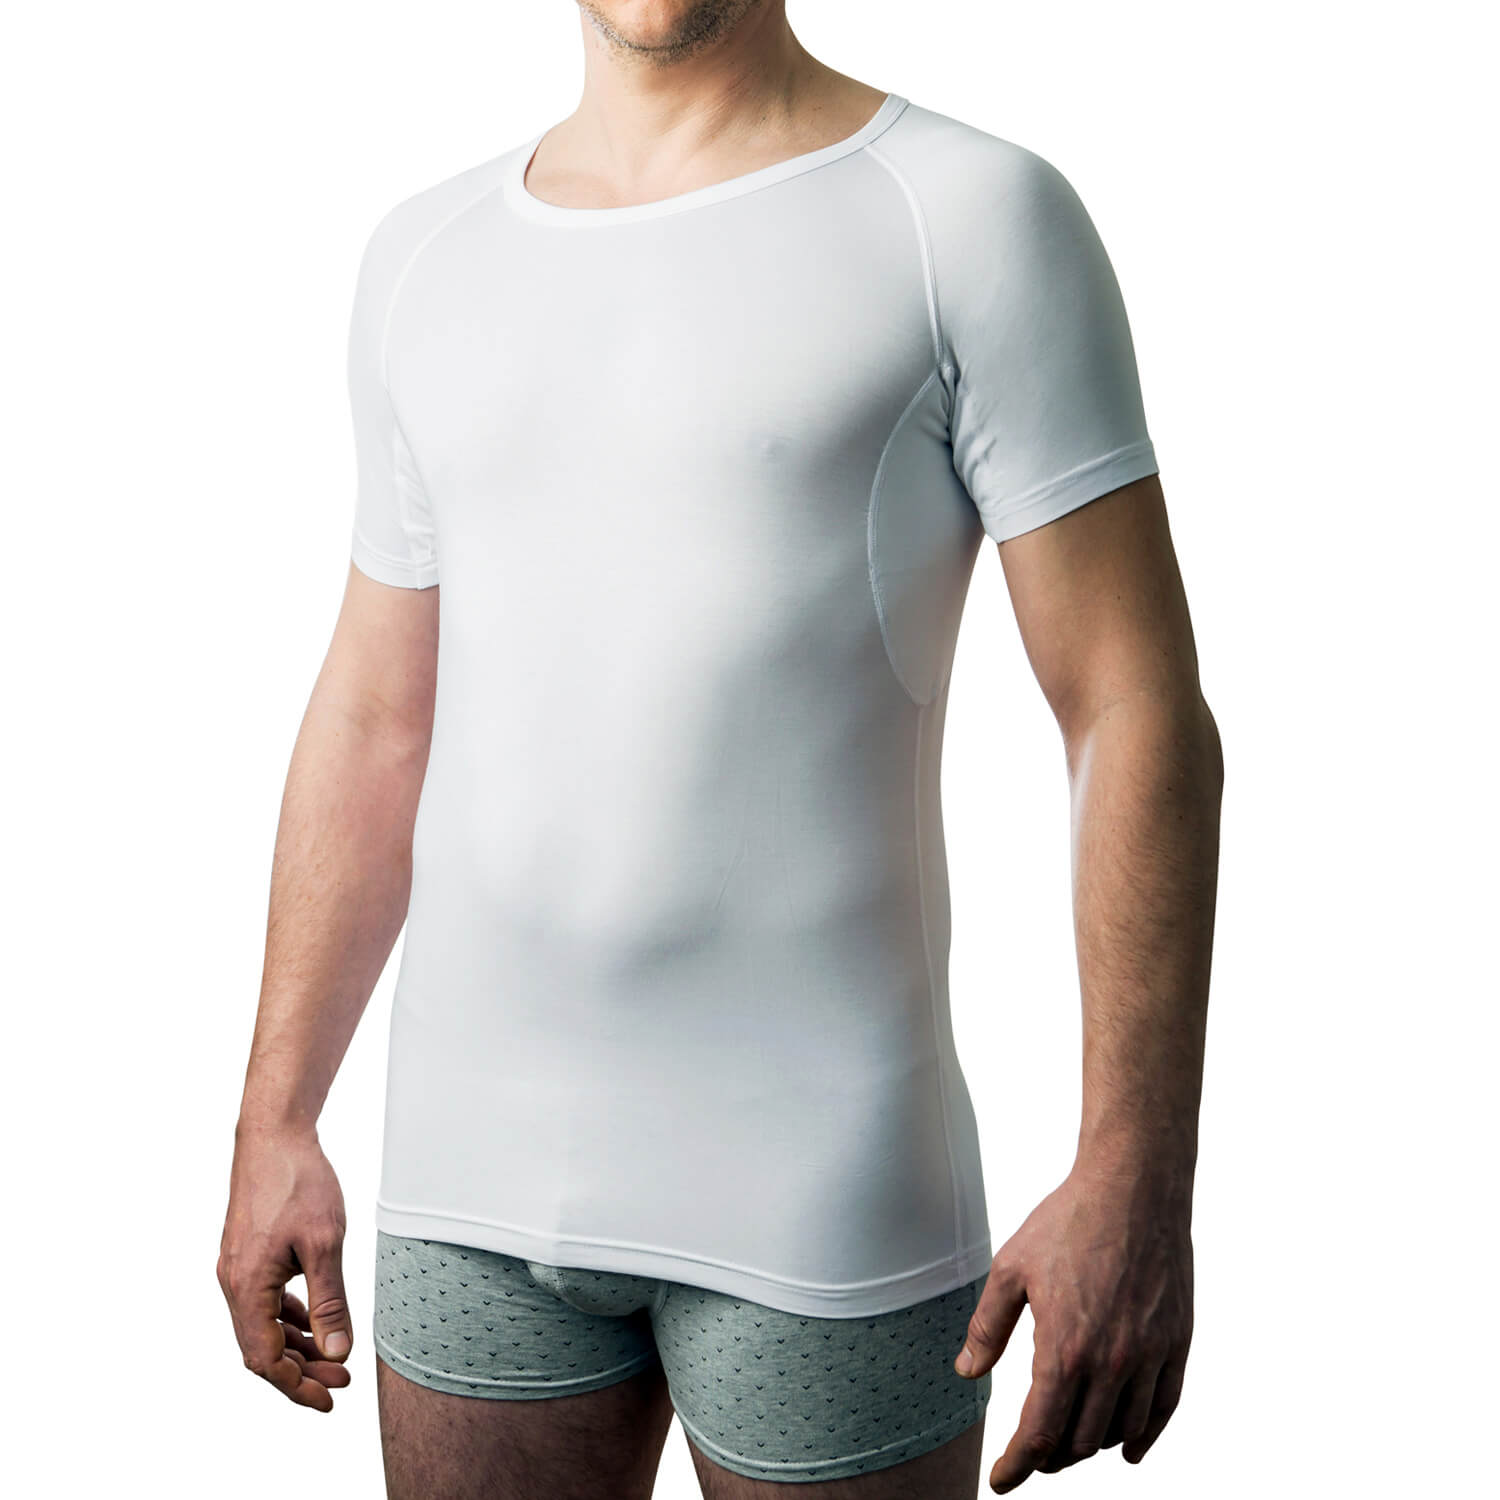 DRYWEAR Sweatproof T-shirt for Men (C-neck, White)